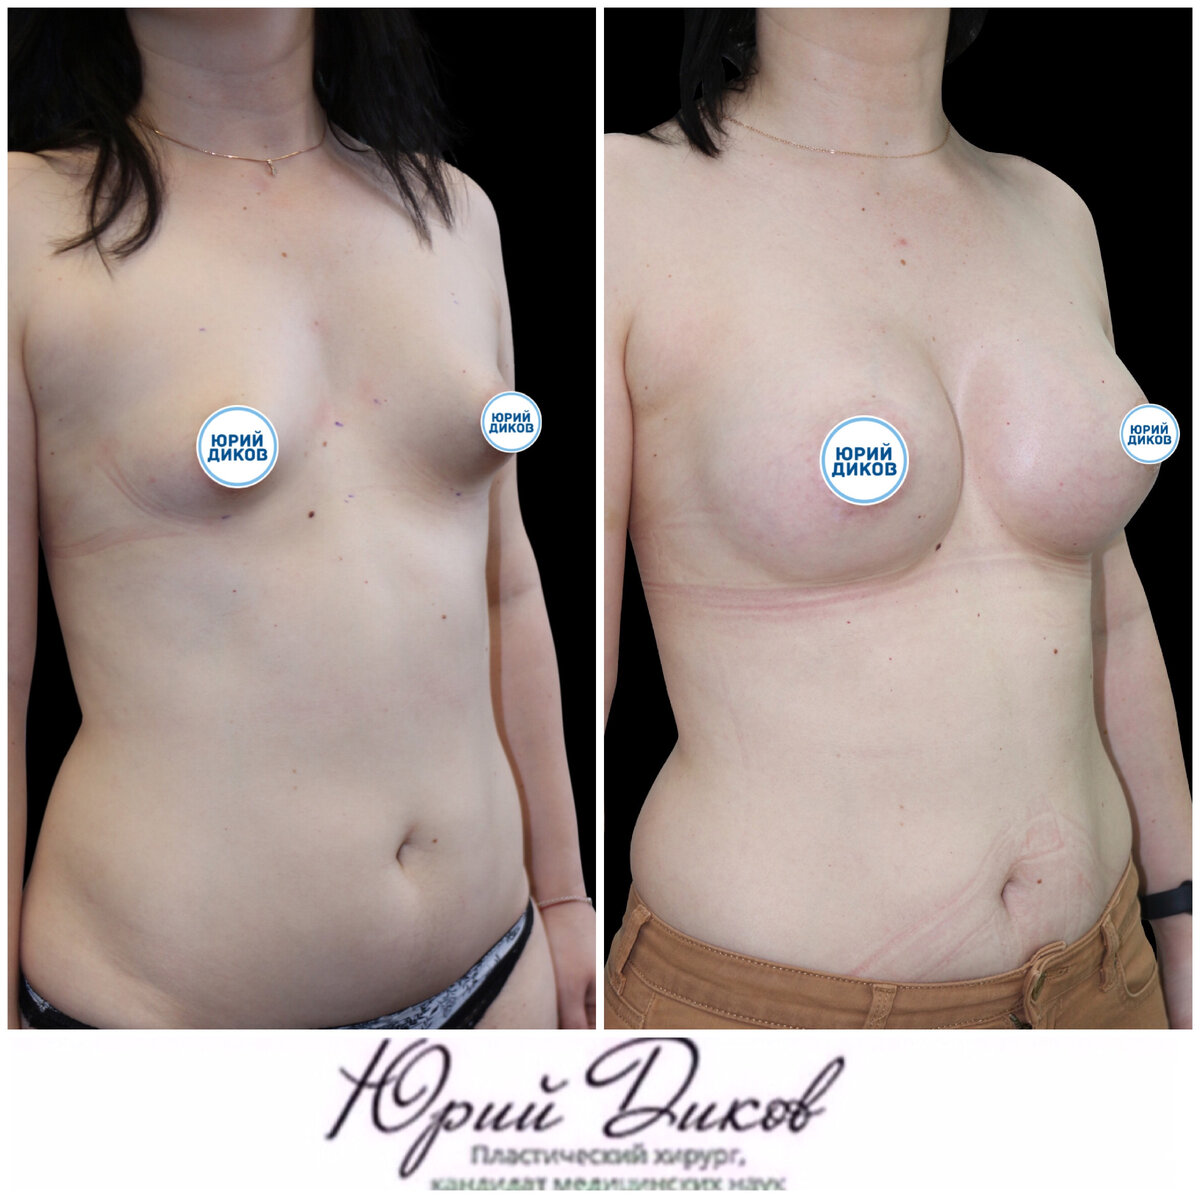 тубулярная форма груди у женщин фото 25